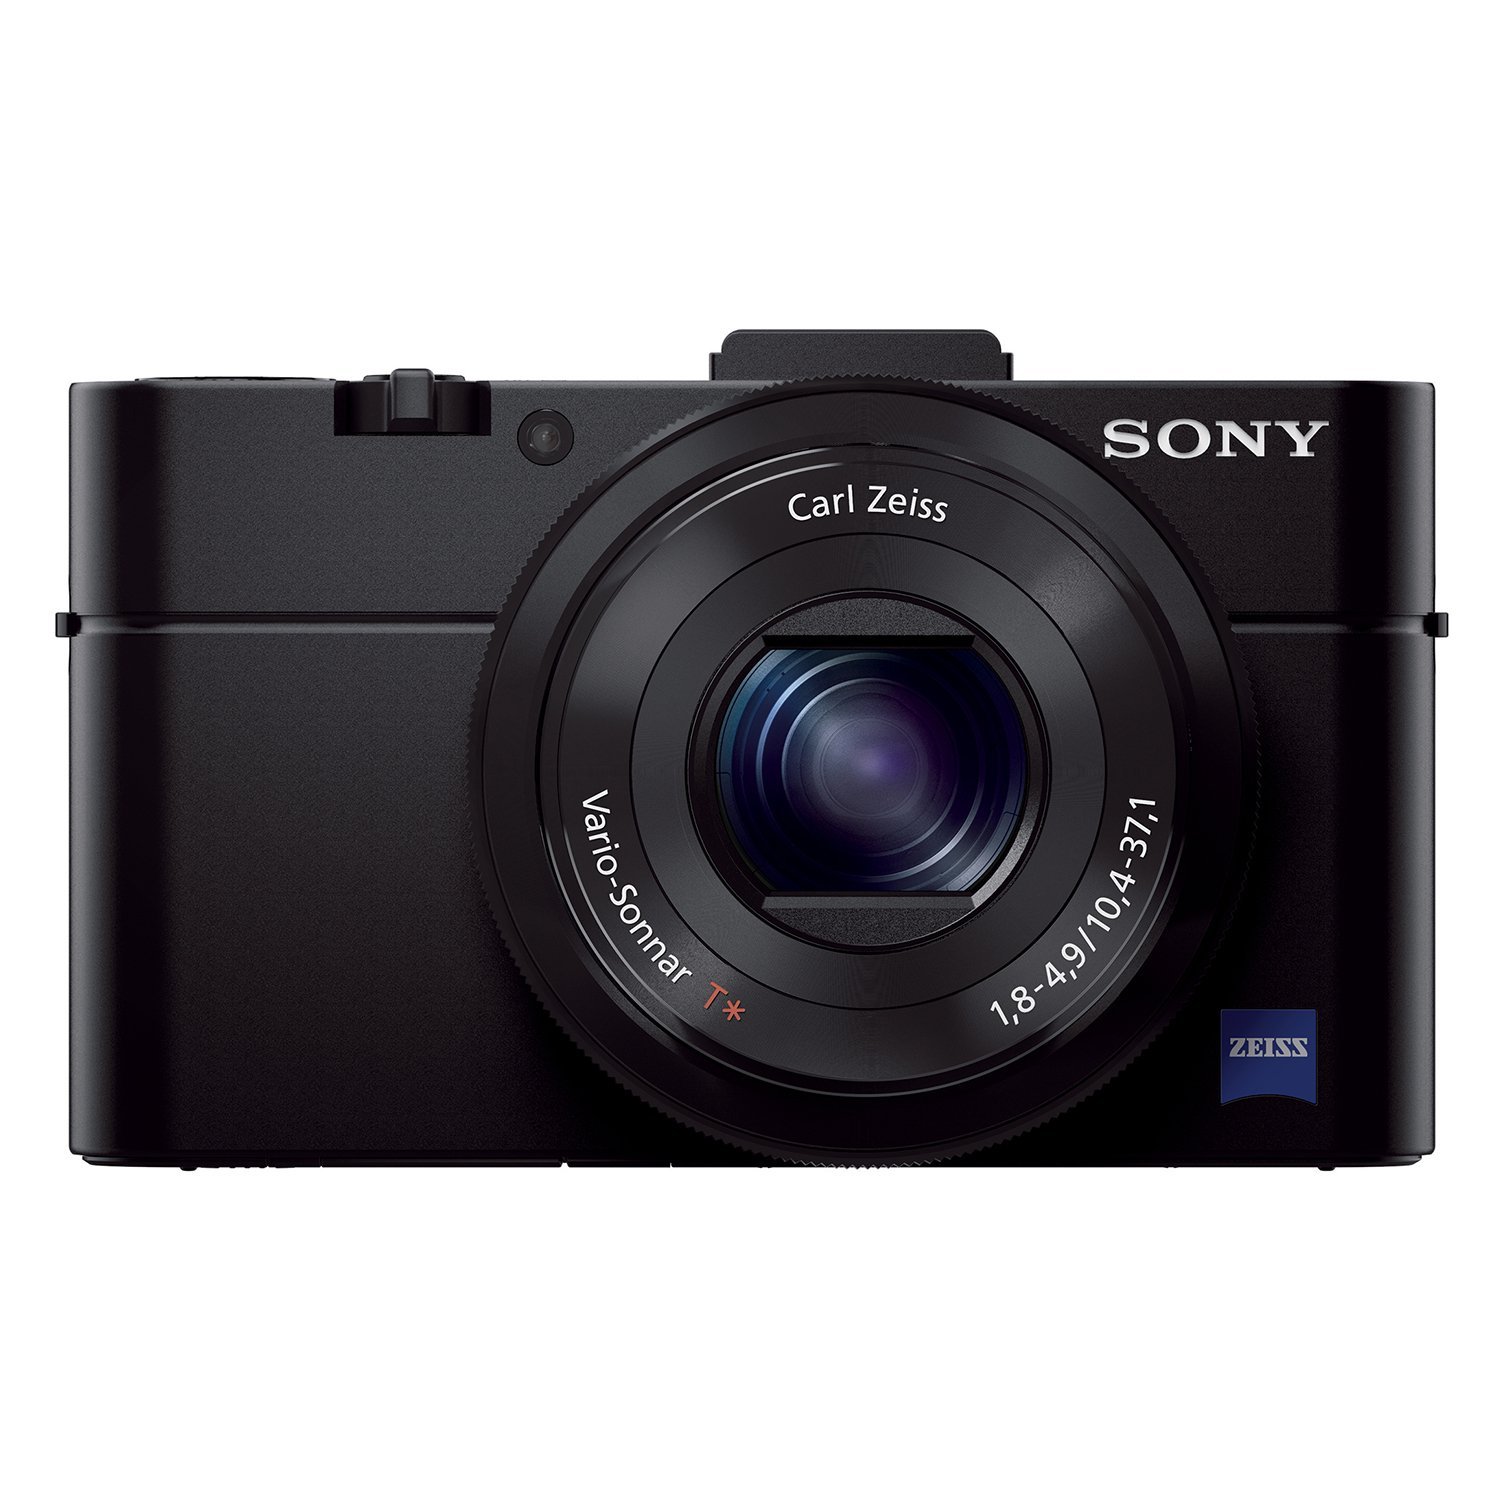 Sony DSCRX100M2 / B 20.2 MP Cyber-shot 디지털 스틸 카메라 (블랙)